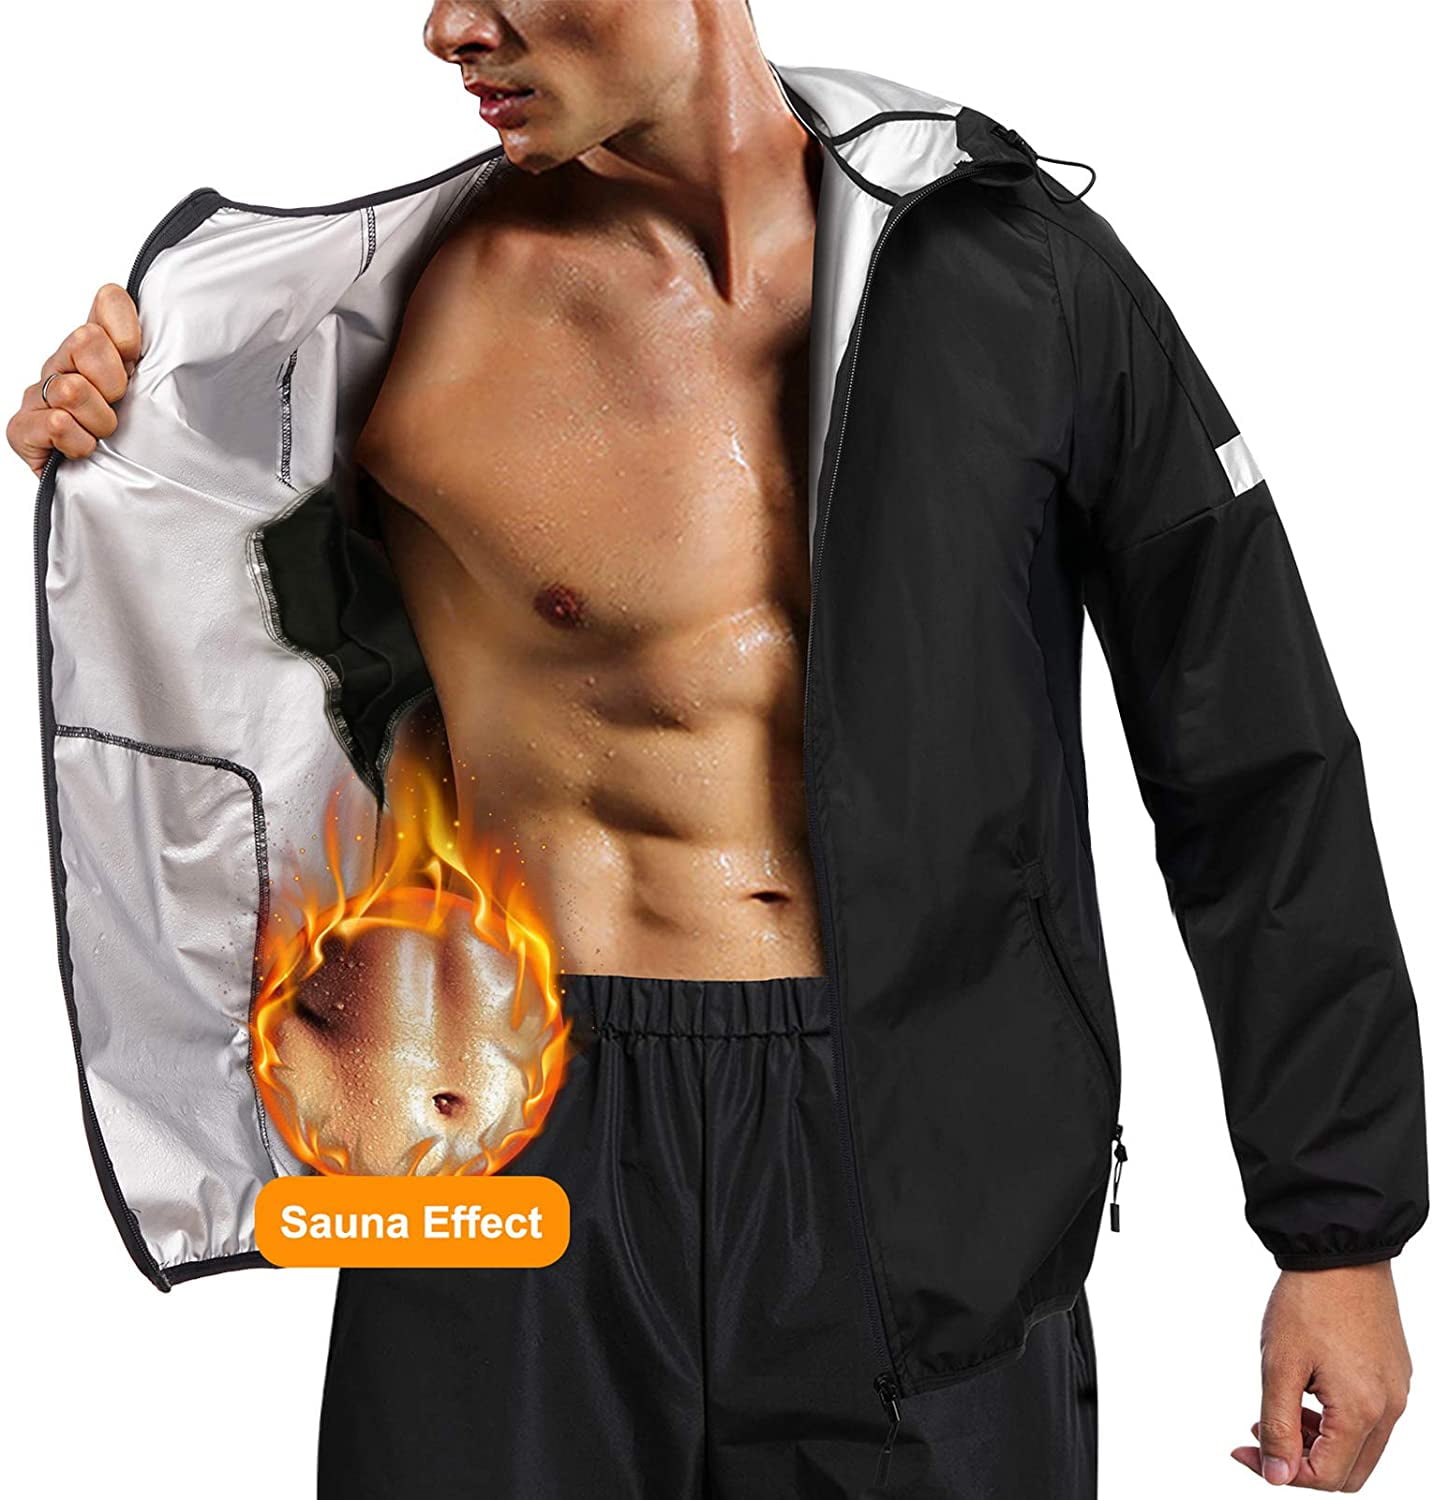 Details about   Men's Neoprene Sauna Vest  for GYM Training Top Body Shaper Sweat Shirt Redu Fat 